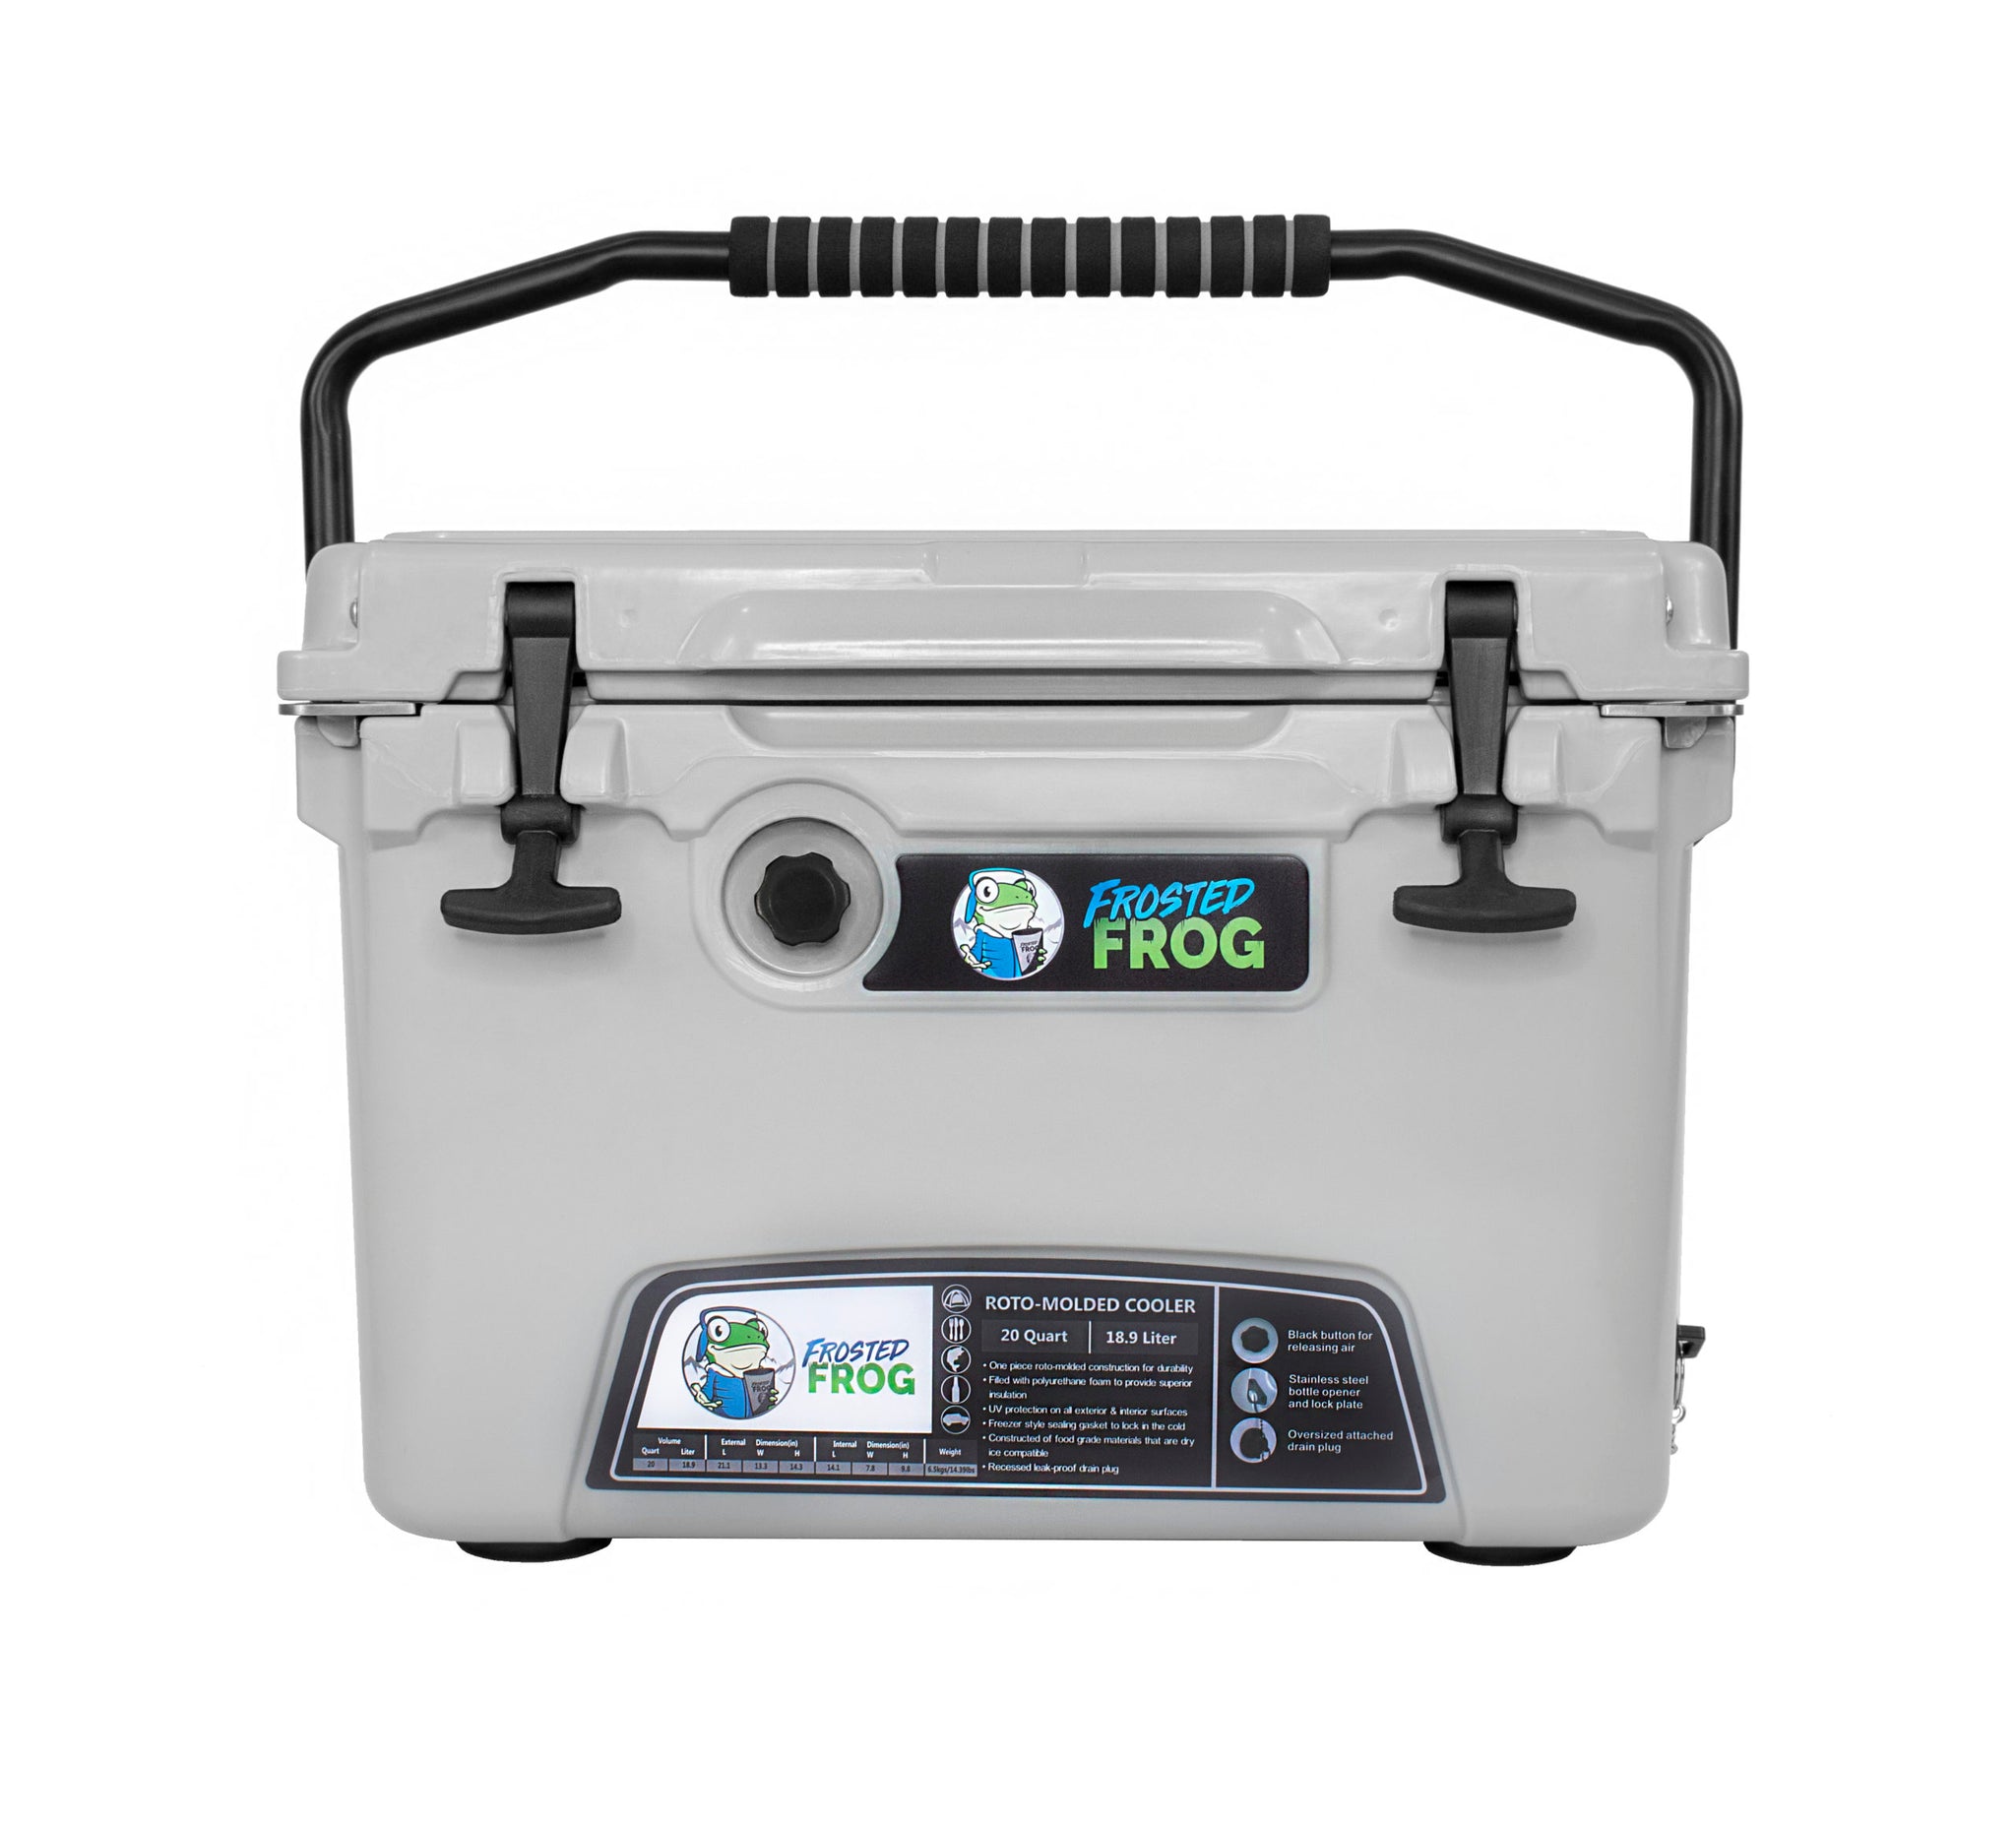 Frosted Frog 20QT Cooler – Cool Gray, 20QT – Pro UTV Parts